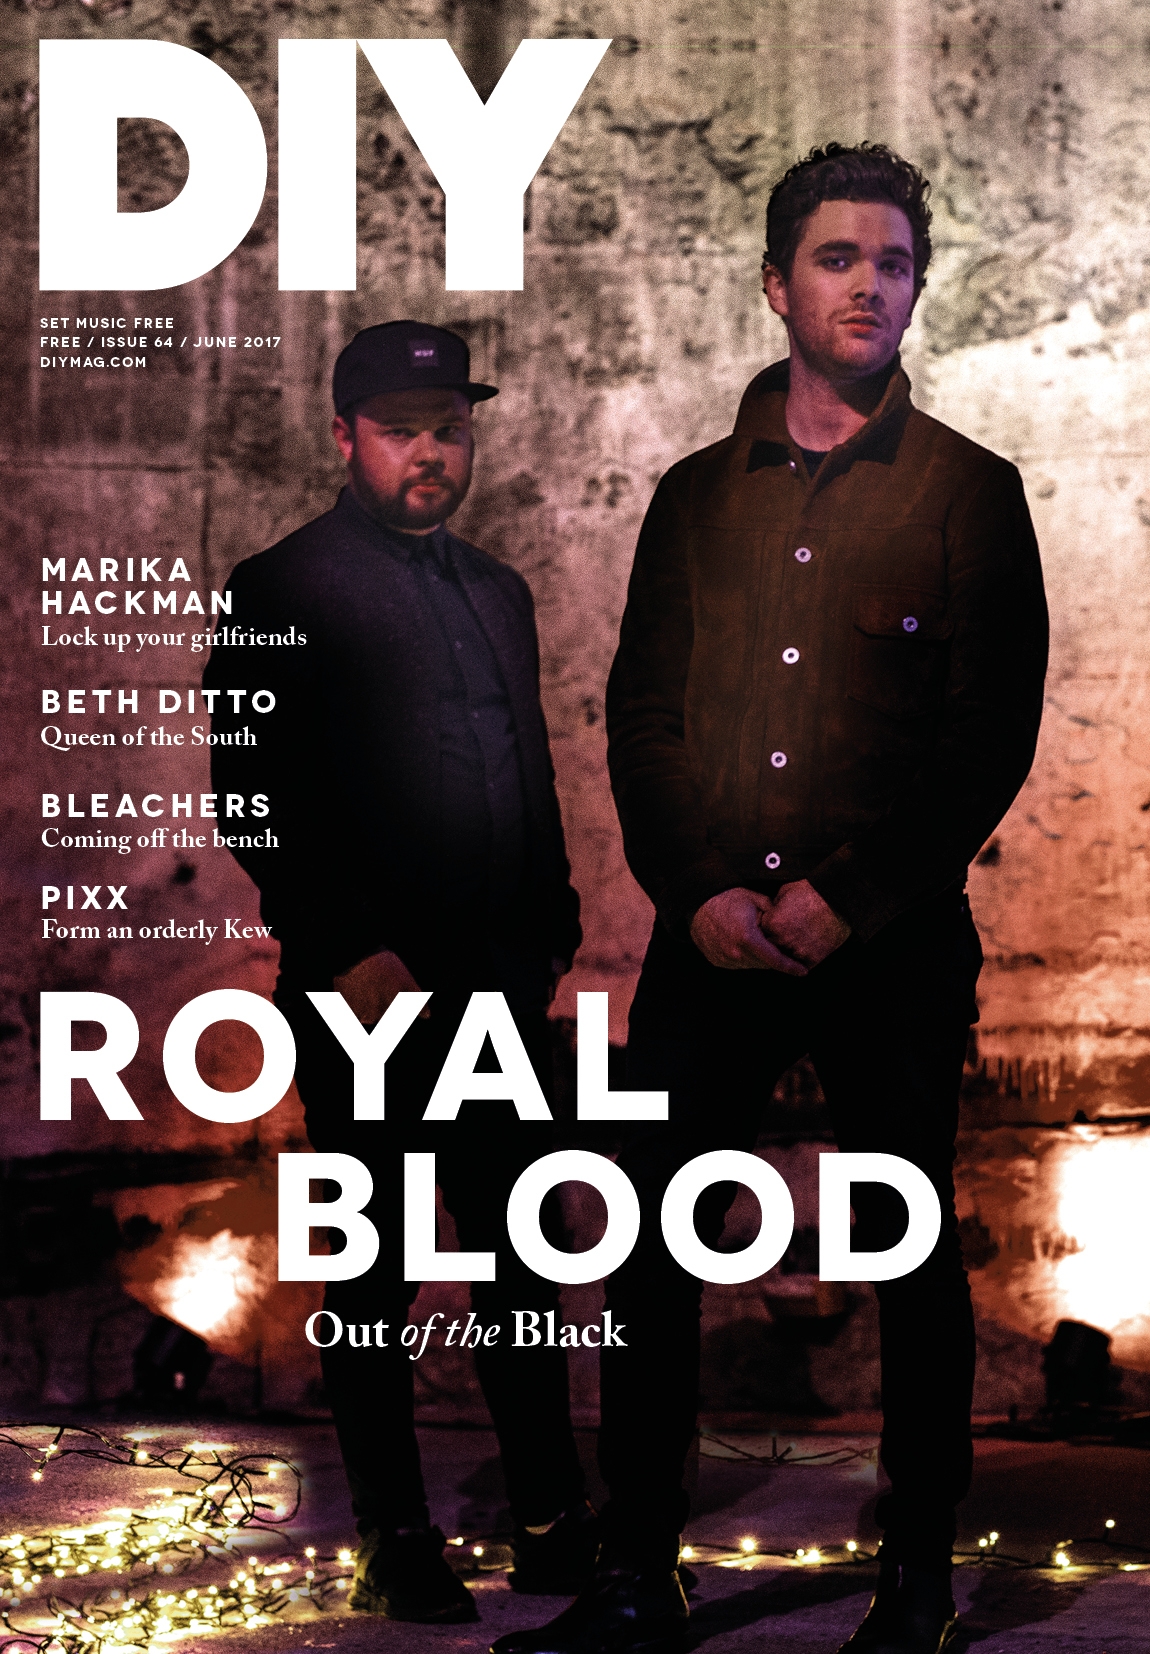 Royal Blood: DIY's June 2017 cover stars revealed!